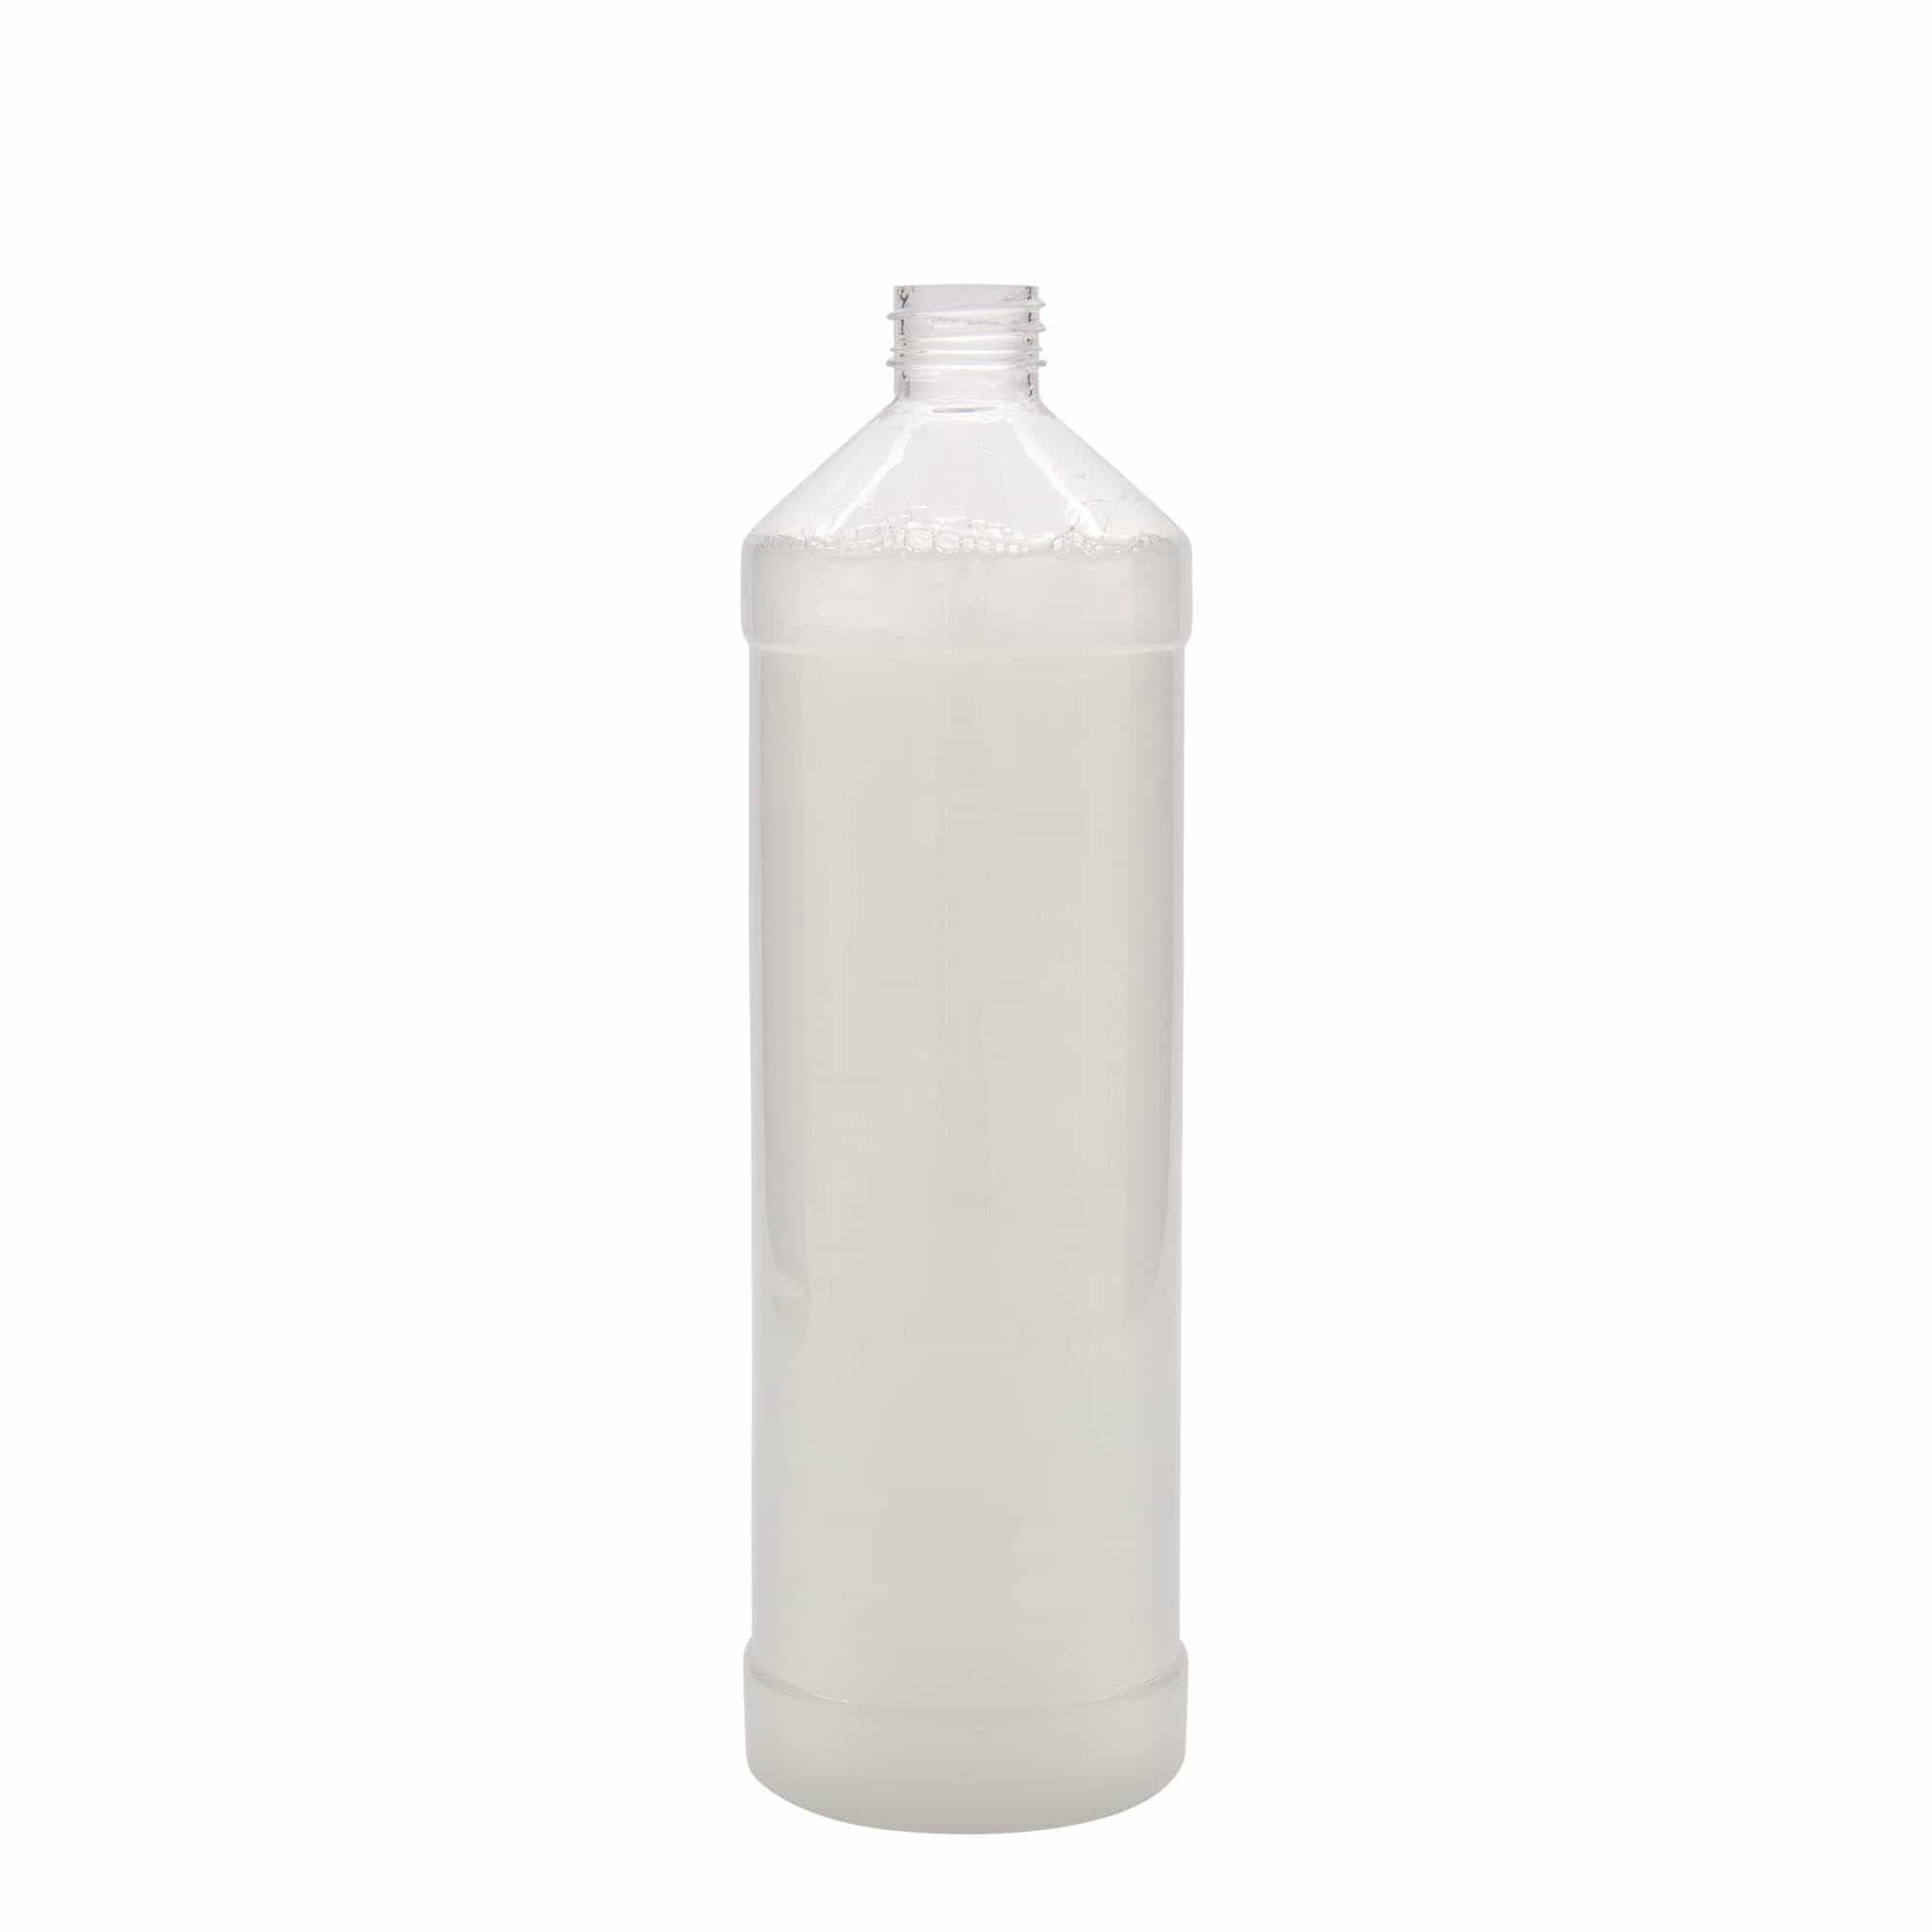 1,000 ml PET bottle 'Everytime', plastic, closure: GPI 28/410